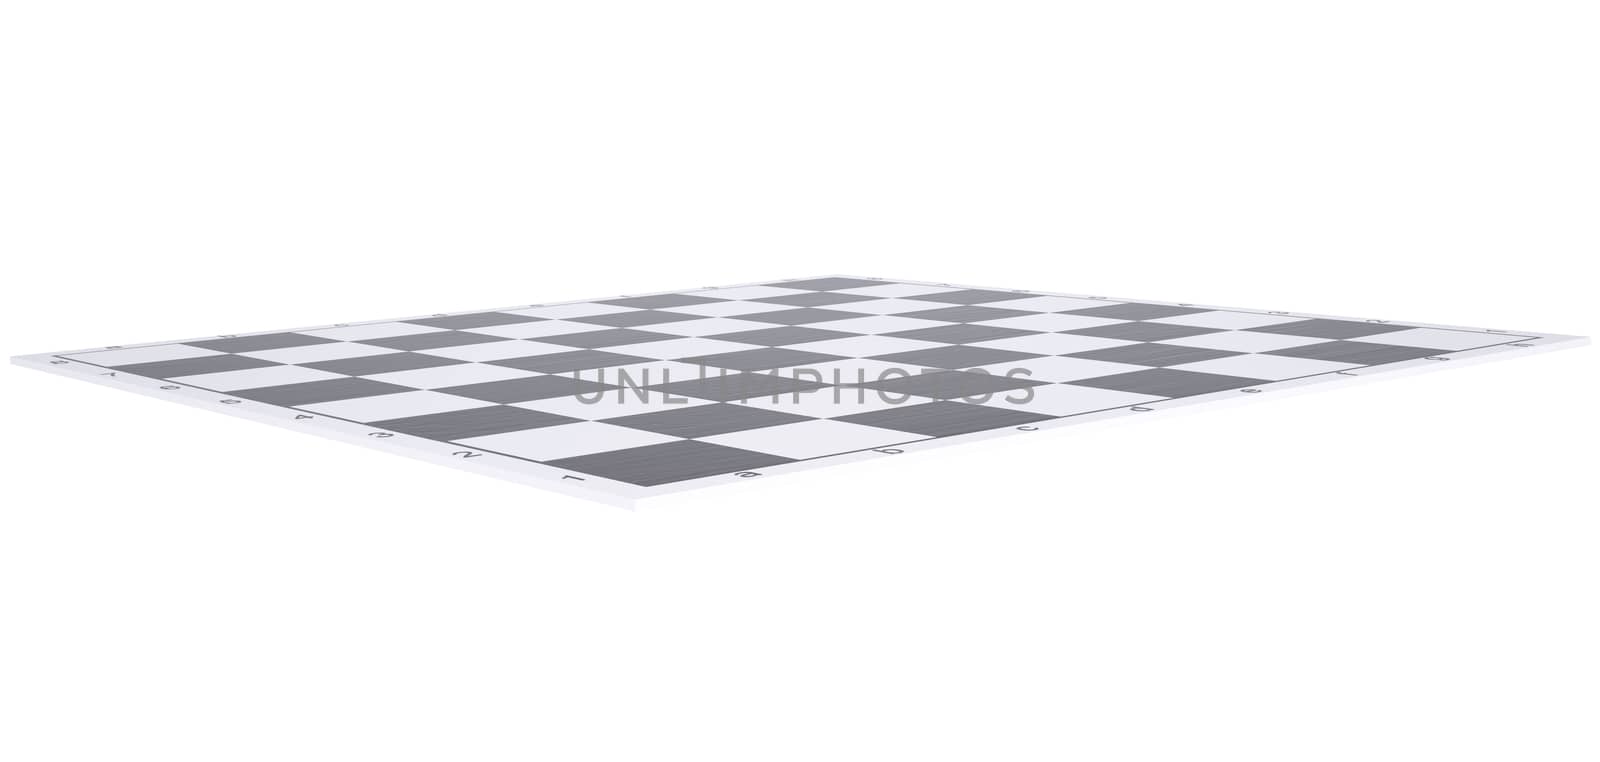 Empty chessboard by cherezoff